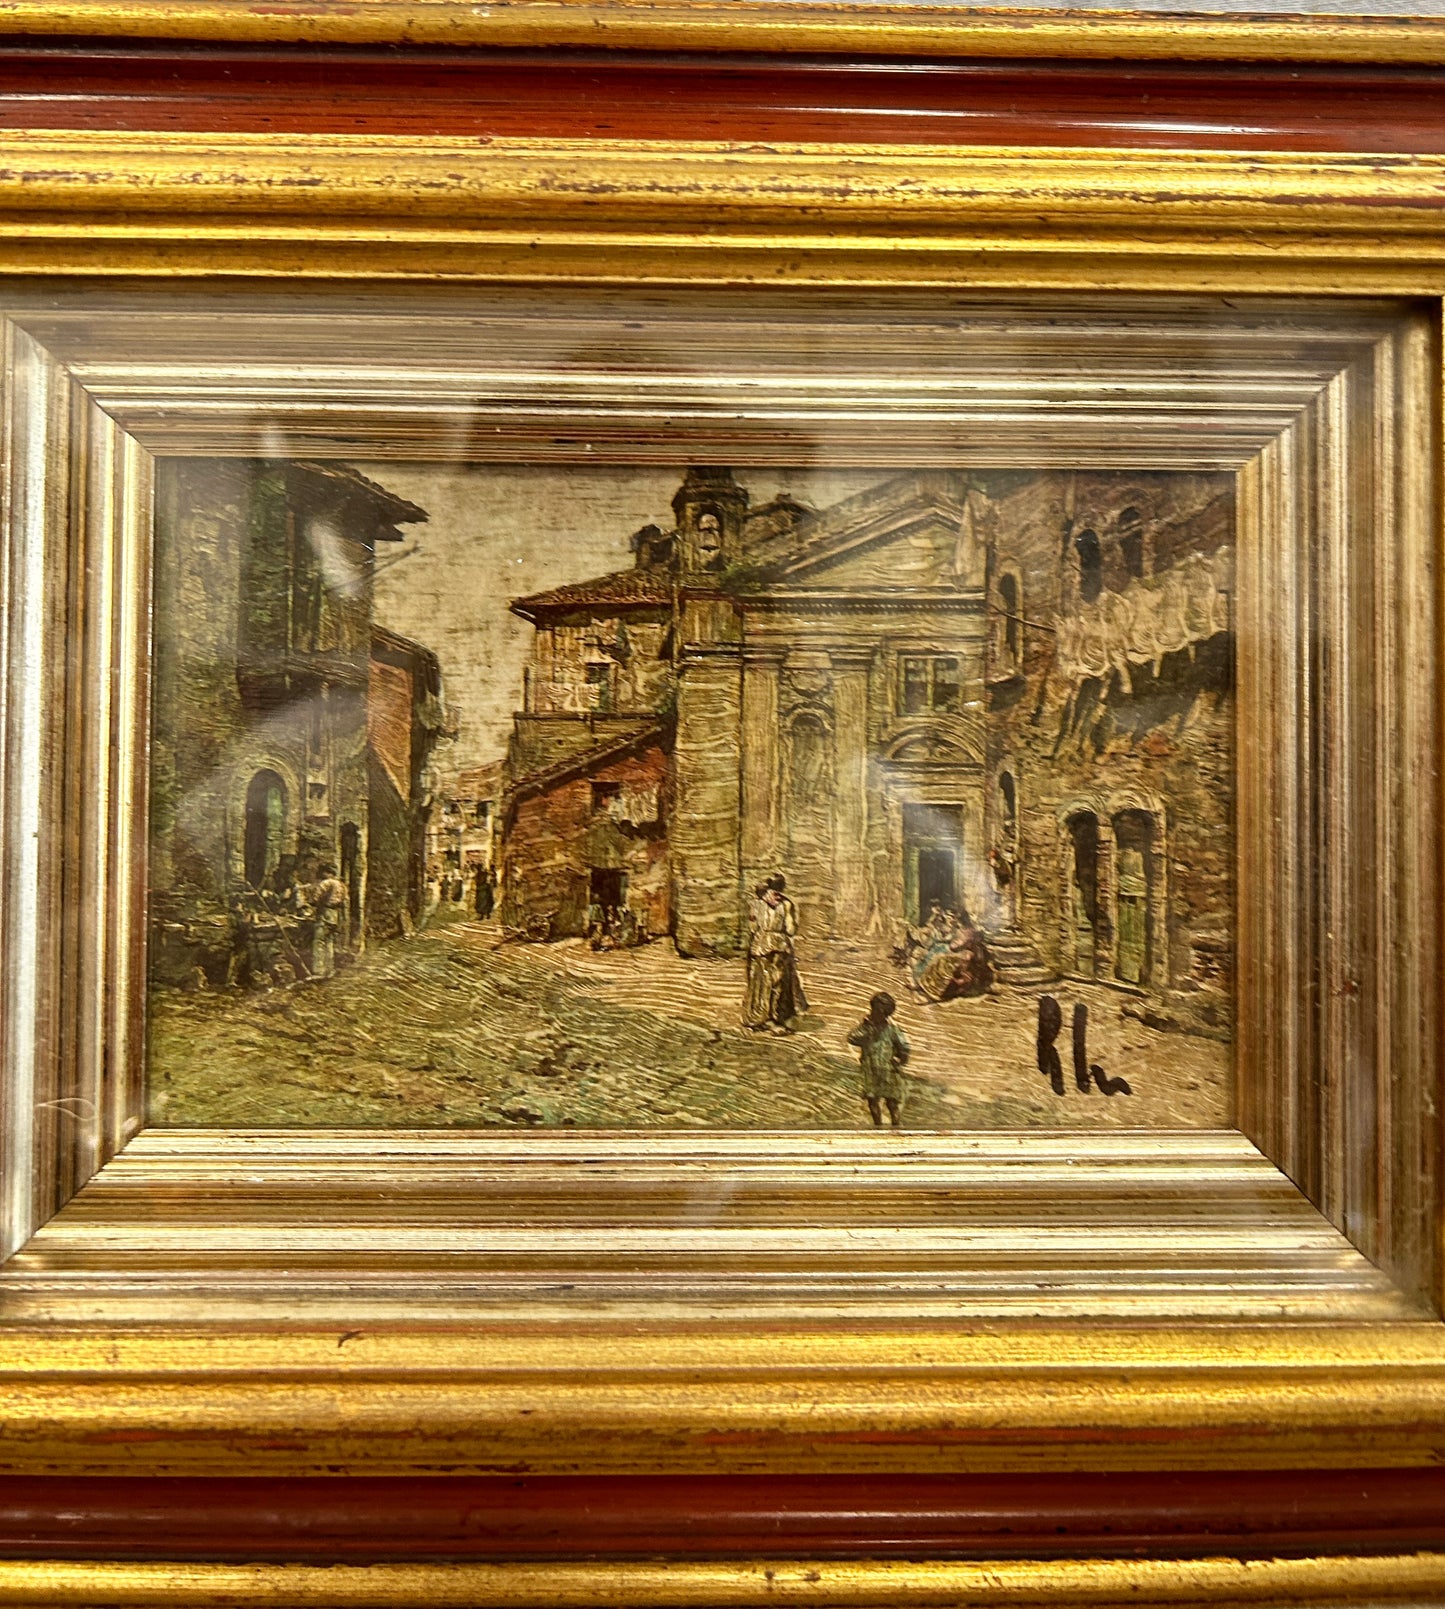 Set of three Early 20th Century Regional Oils on Canvas of Italian Rural Life